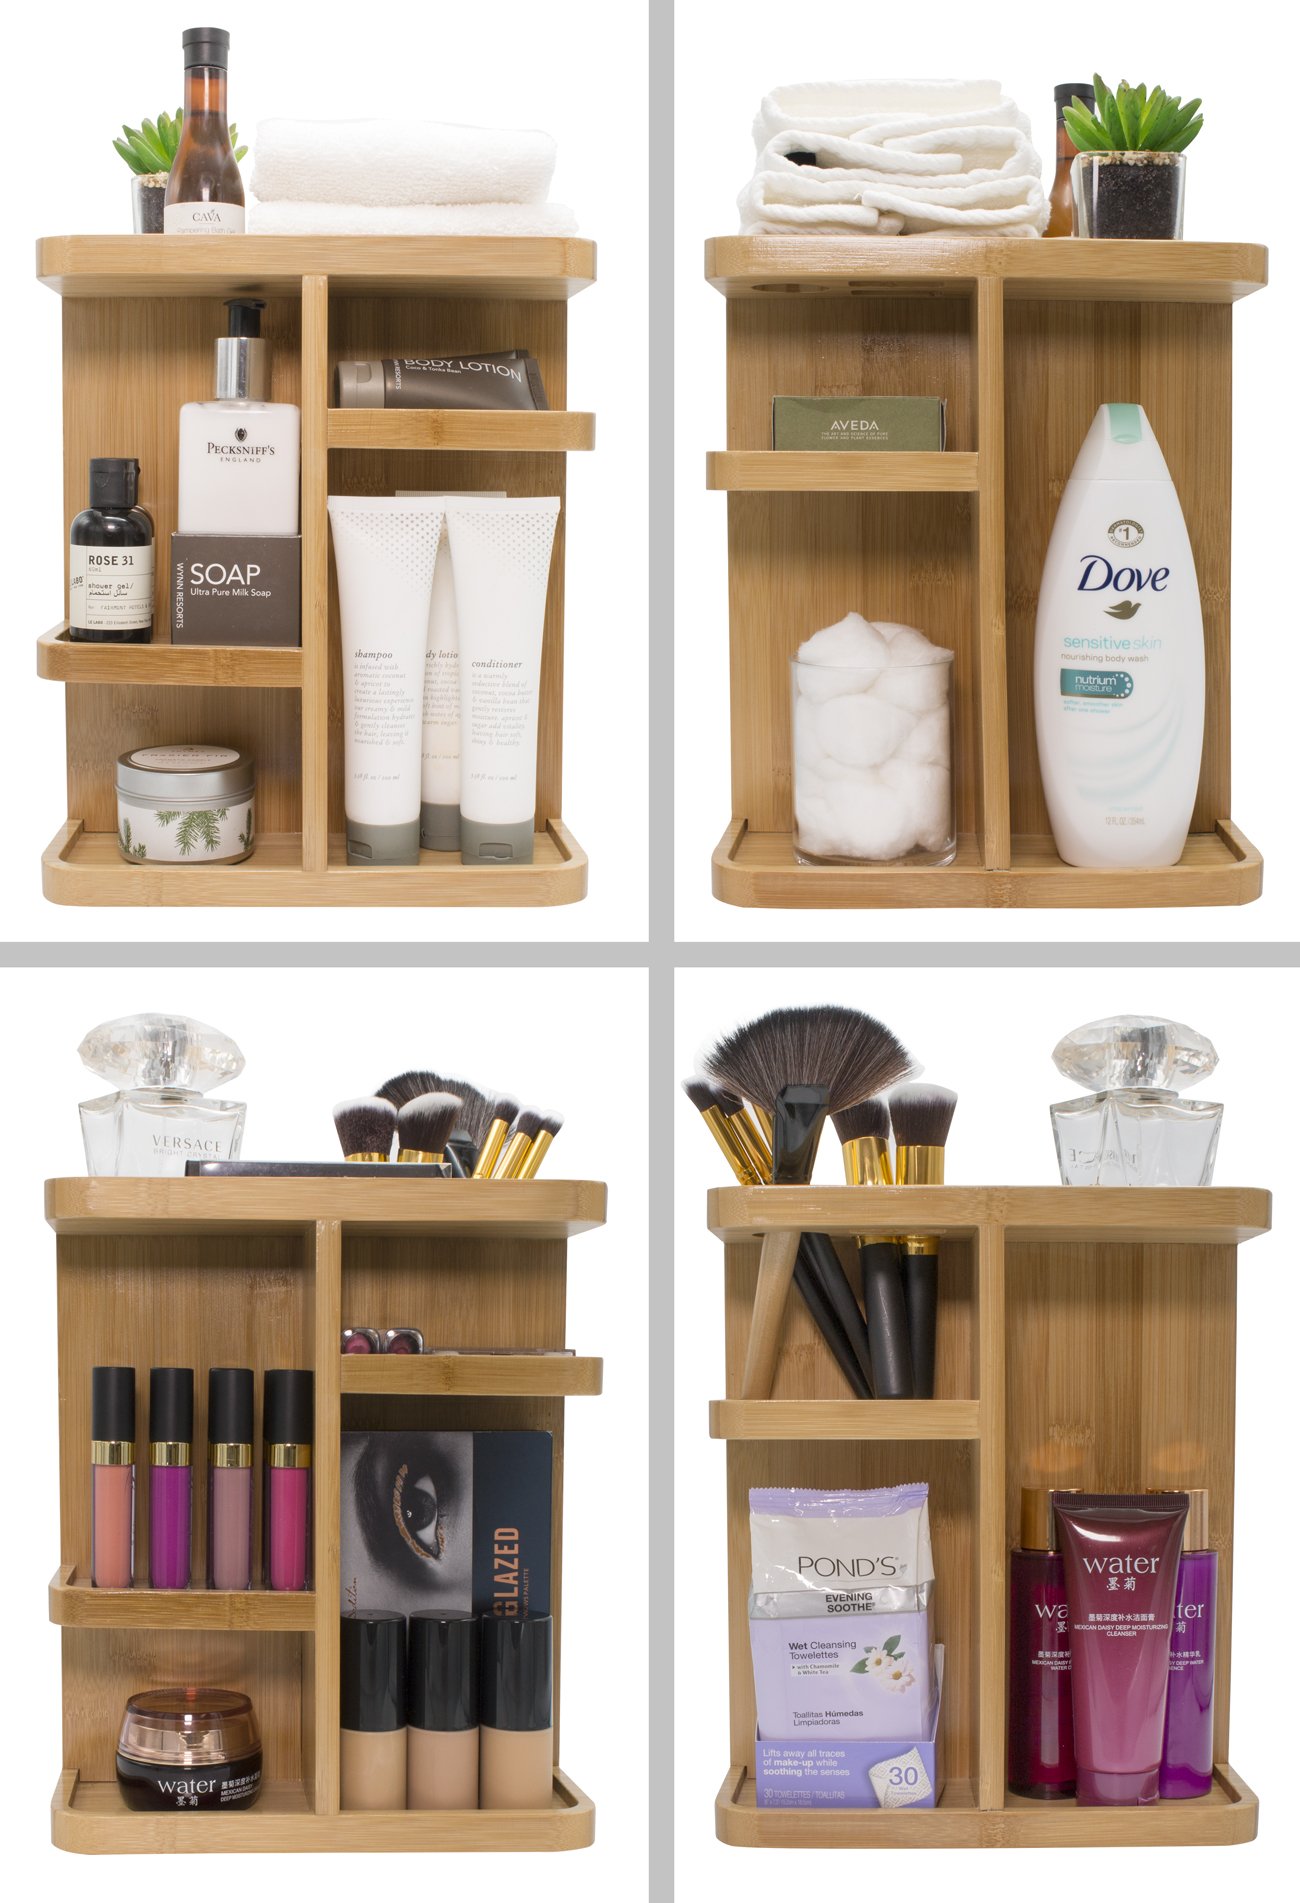 Sorbus 360° Bamboo Makeup Organizer - Multi-Function Storage Carousel for Cosmetics, Make Up, Skin Care Organizer - Rotating Makeup Organizer for Vanity, Bathroom Storage, Bedroom, Desk, Closet, Dorm